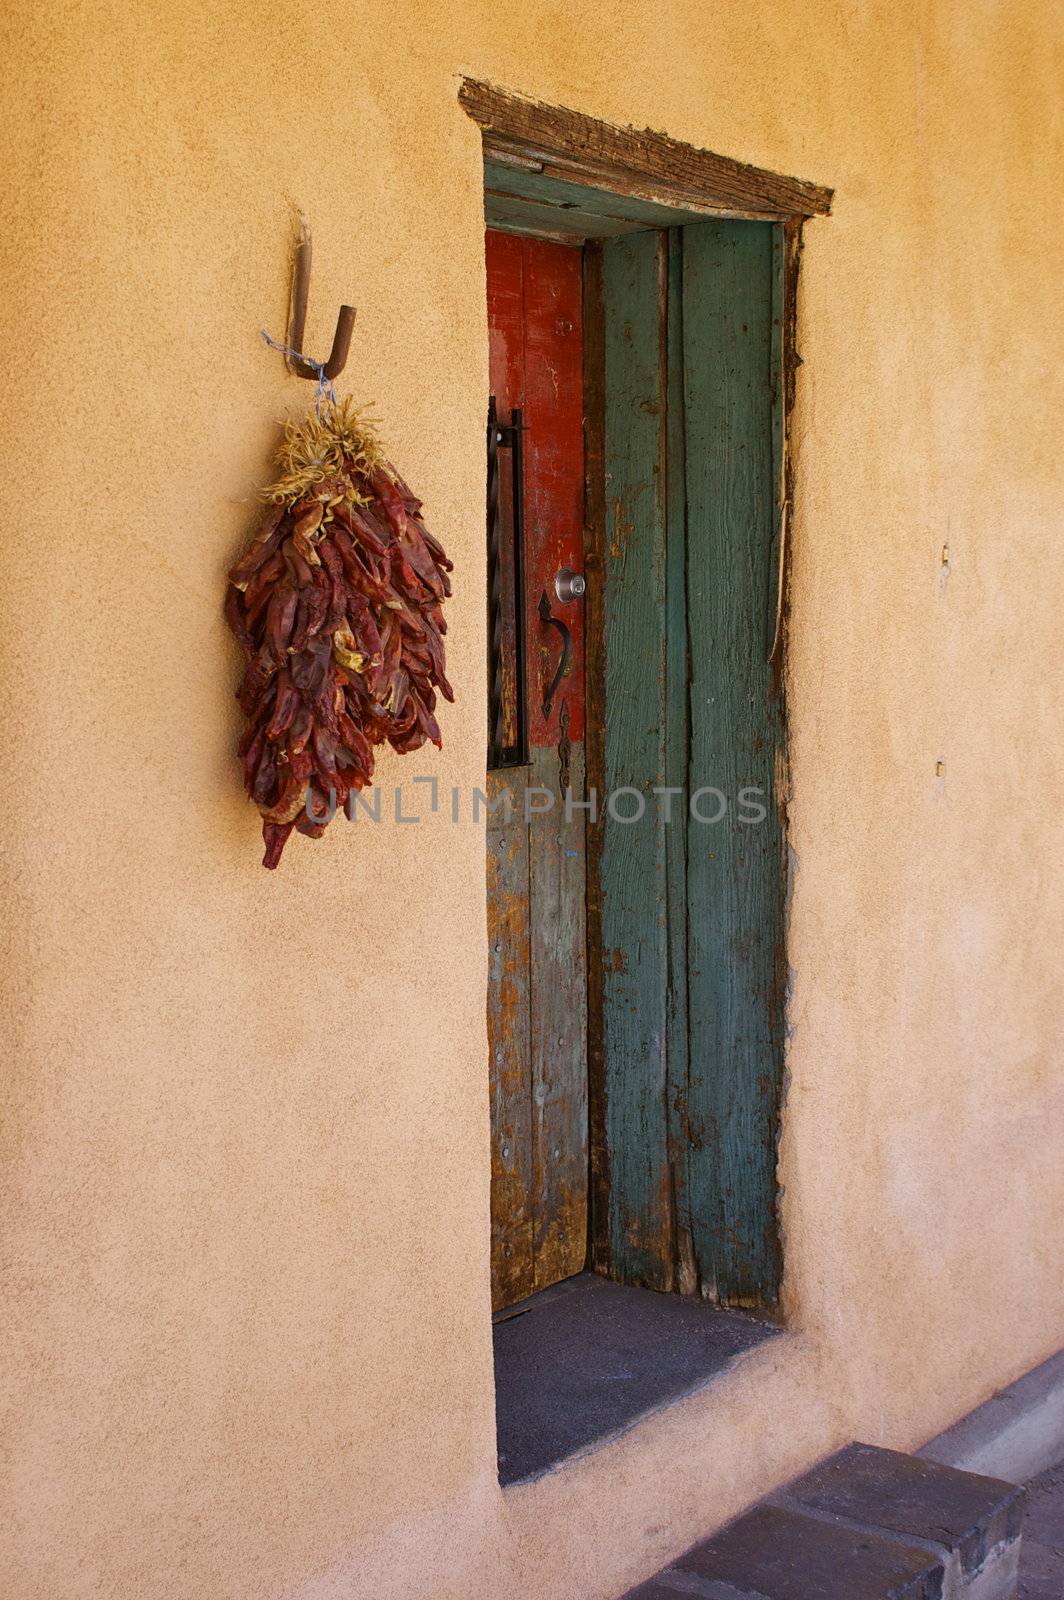 New Mexico Adobe Building - Doorway by PrincessToula